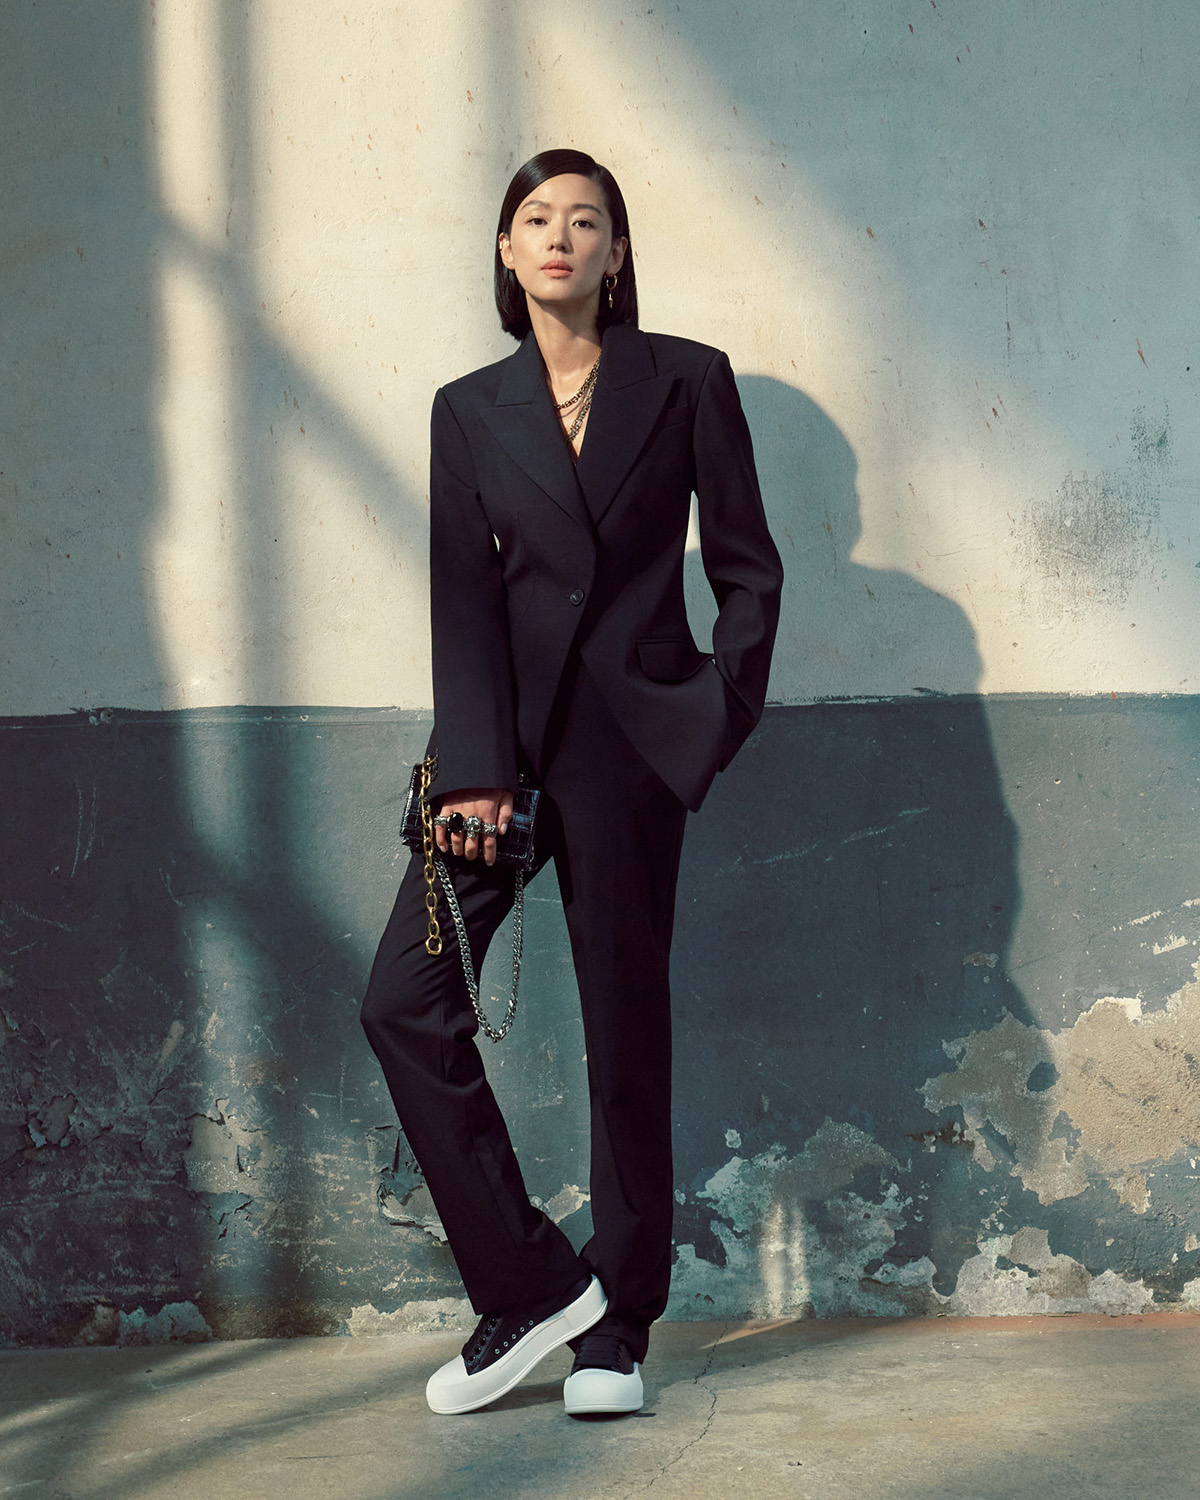 Jun Ji Hyun by Ahn Jooyoung for Vogue Taiwan October 2021